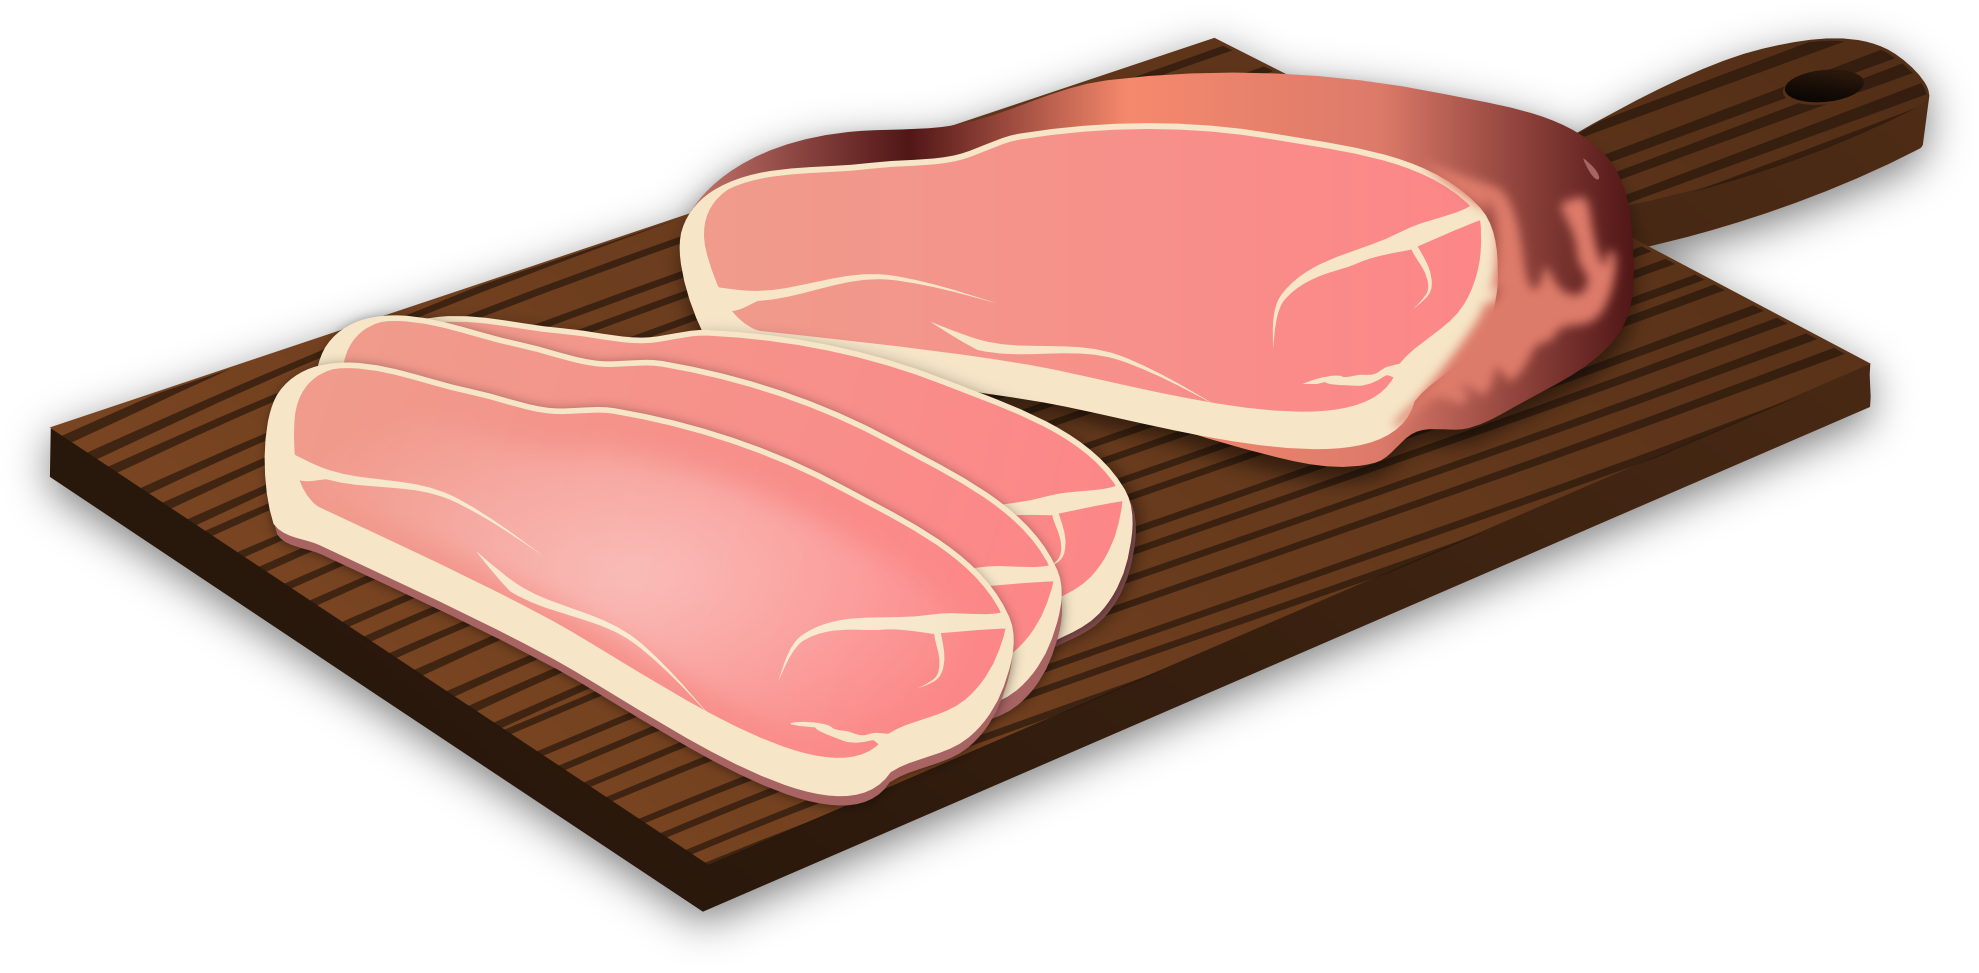 Ham Clip Art Free - Free Clipart Images